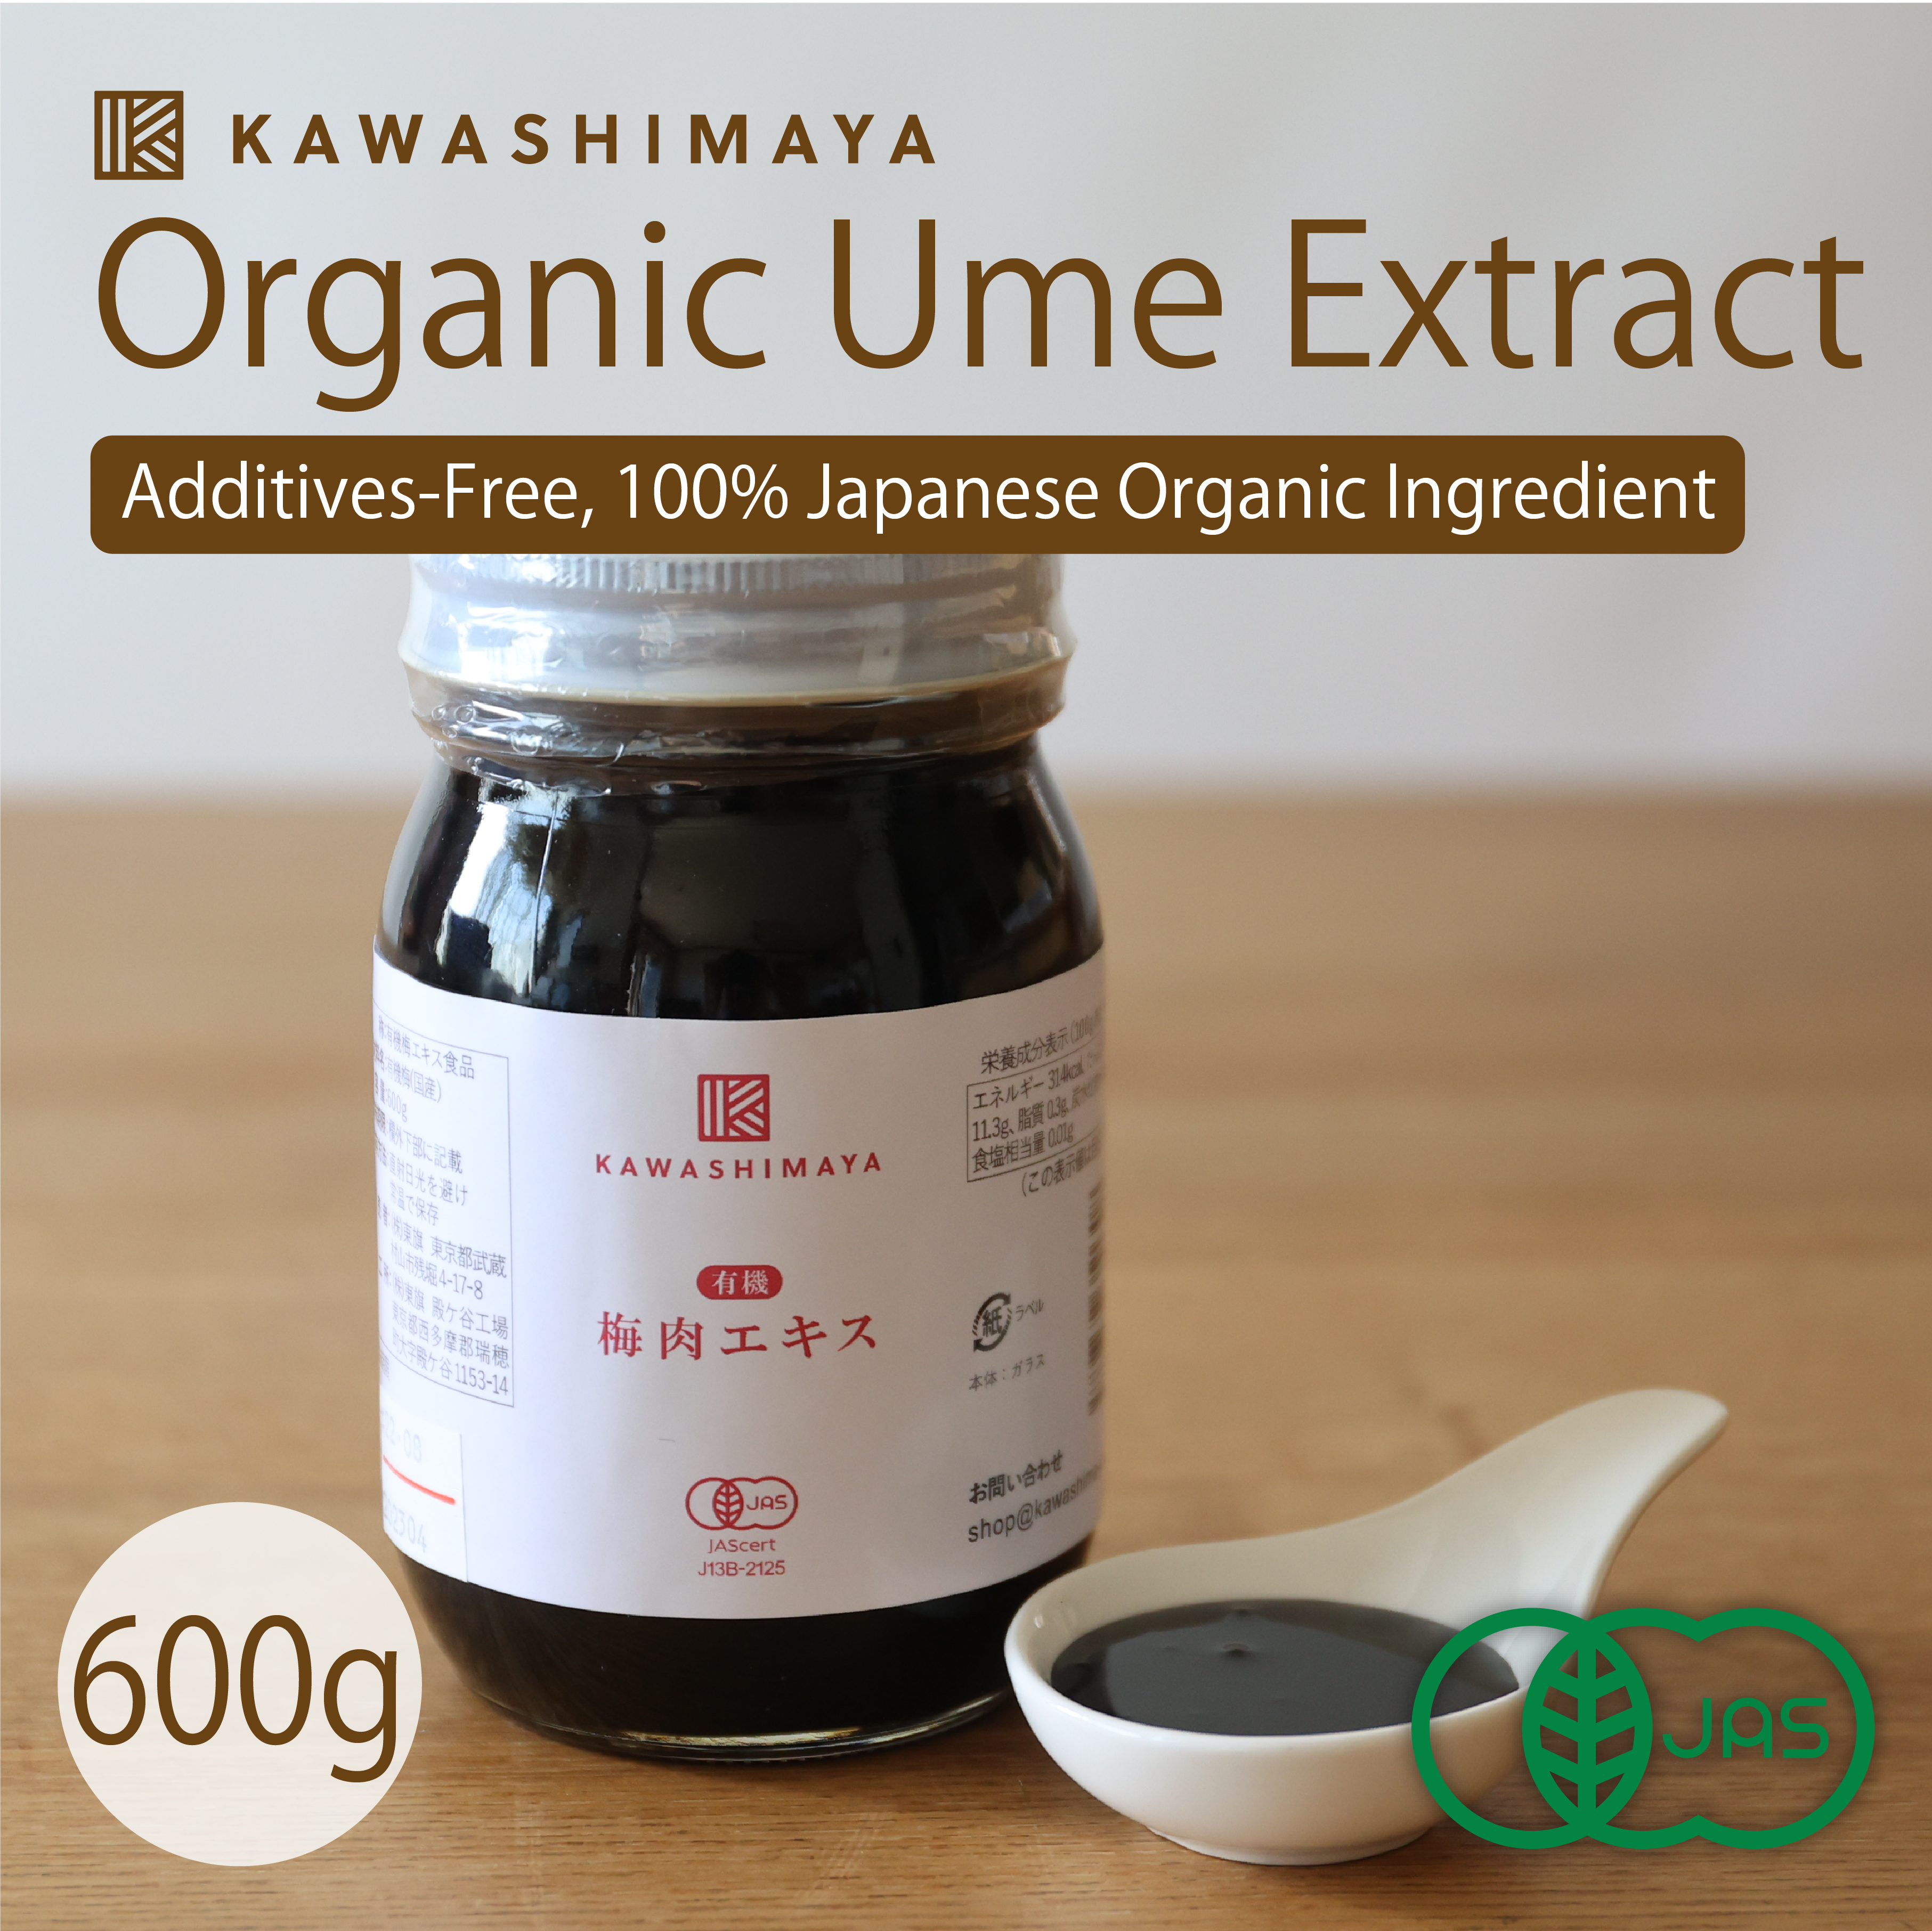 Organic Ume Extract 600g